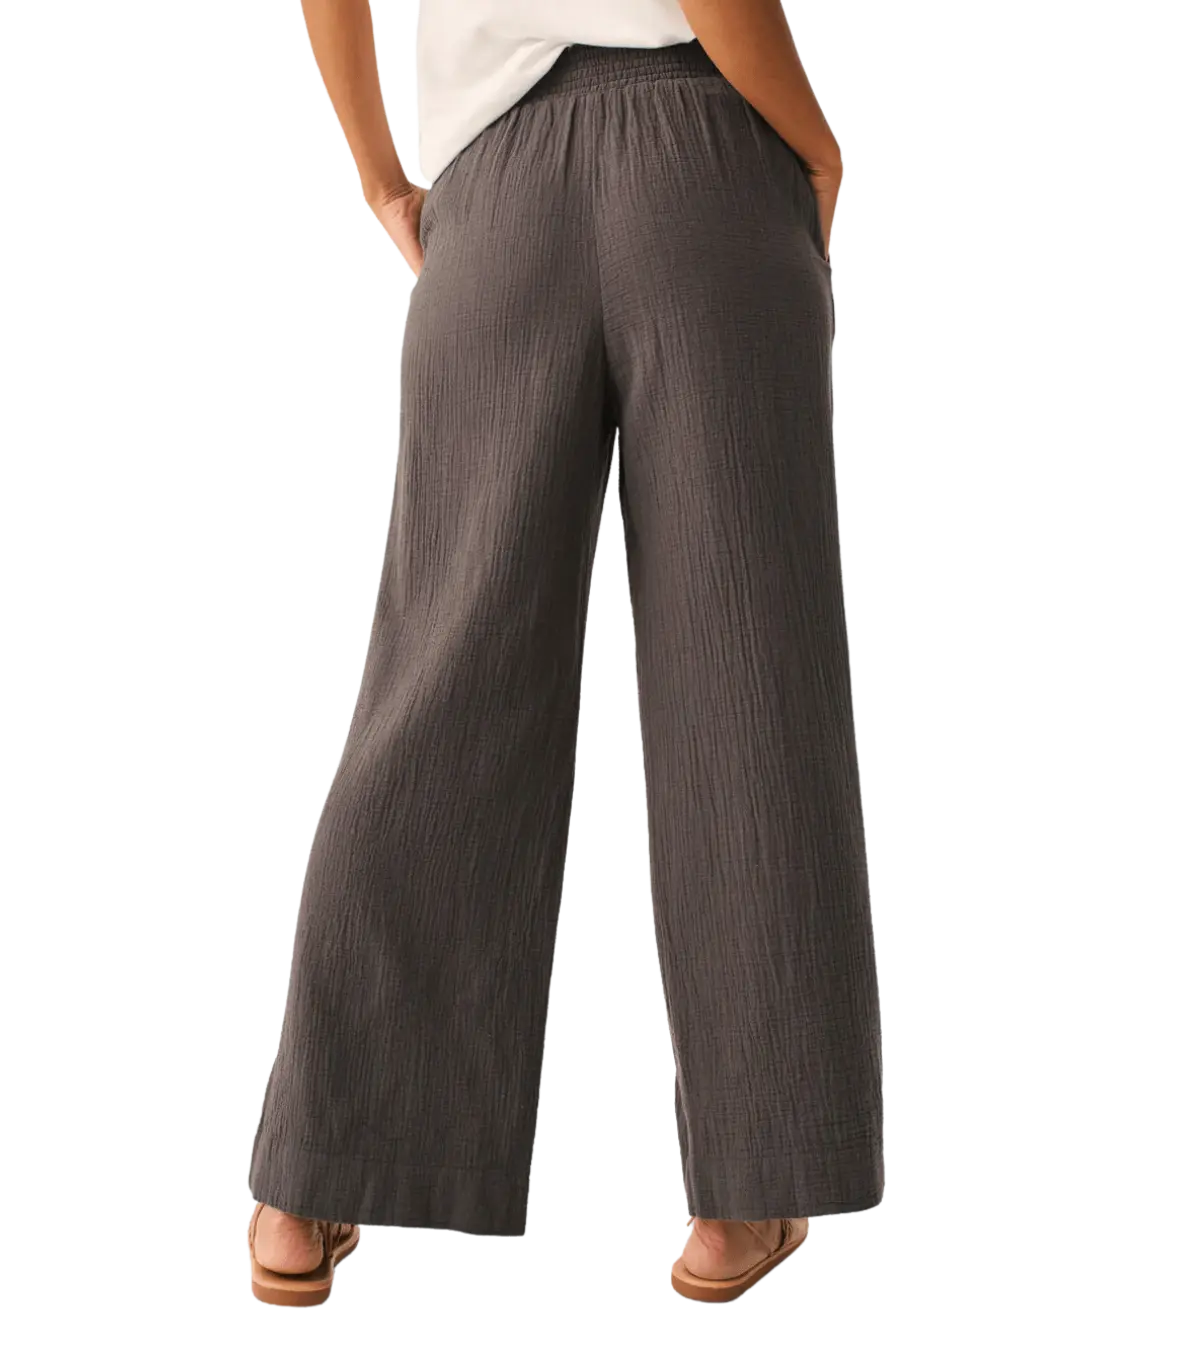 Soft Surroundings 100% Cotton Black Casual Pants Size XL (Tall